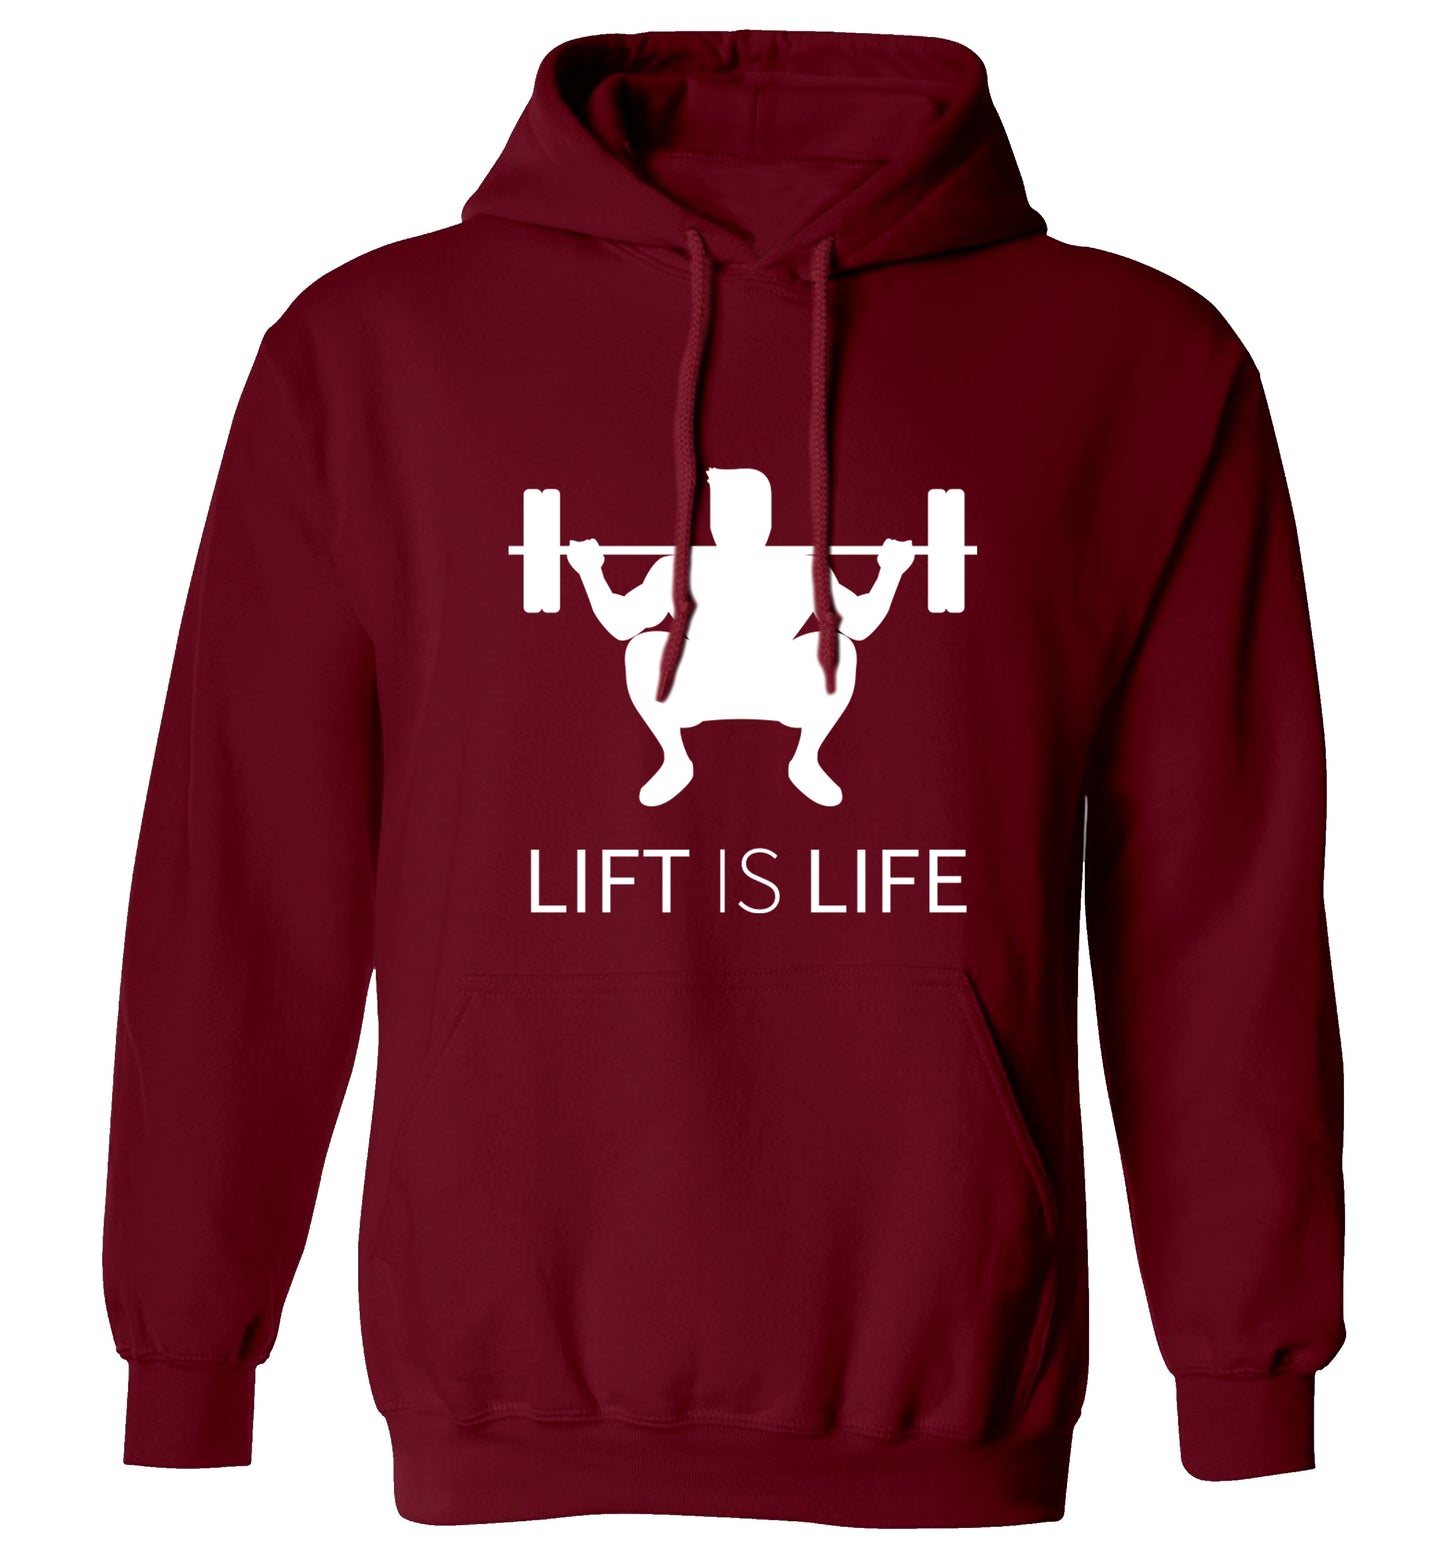 Lift is life adults unisex maroon hoodie 2XL